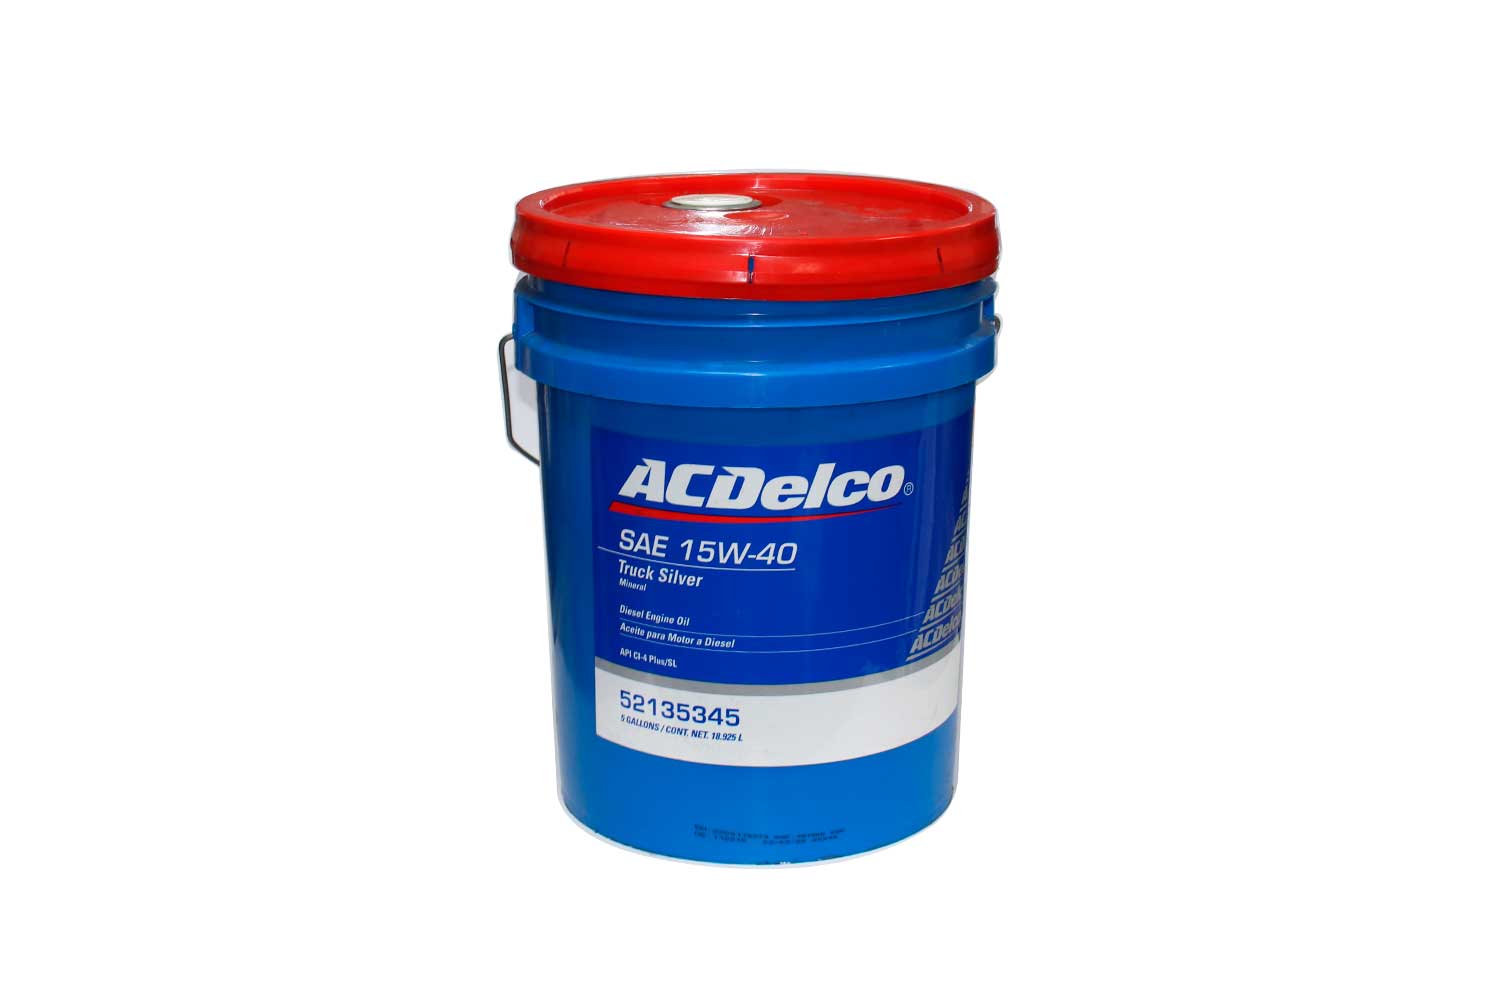 ACEITE ACDELCO 15W40 CI4 Plus ( BALDE 5 Glns )